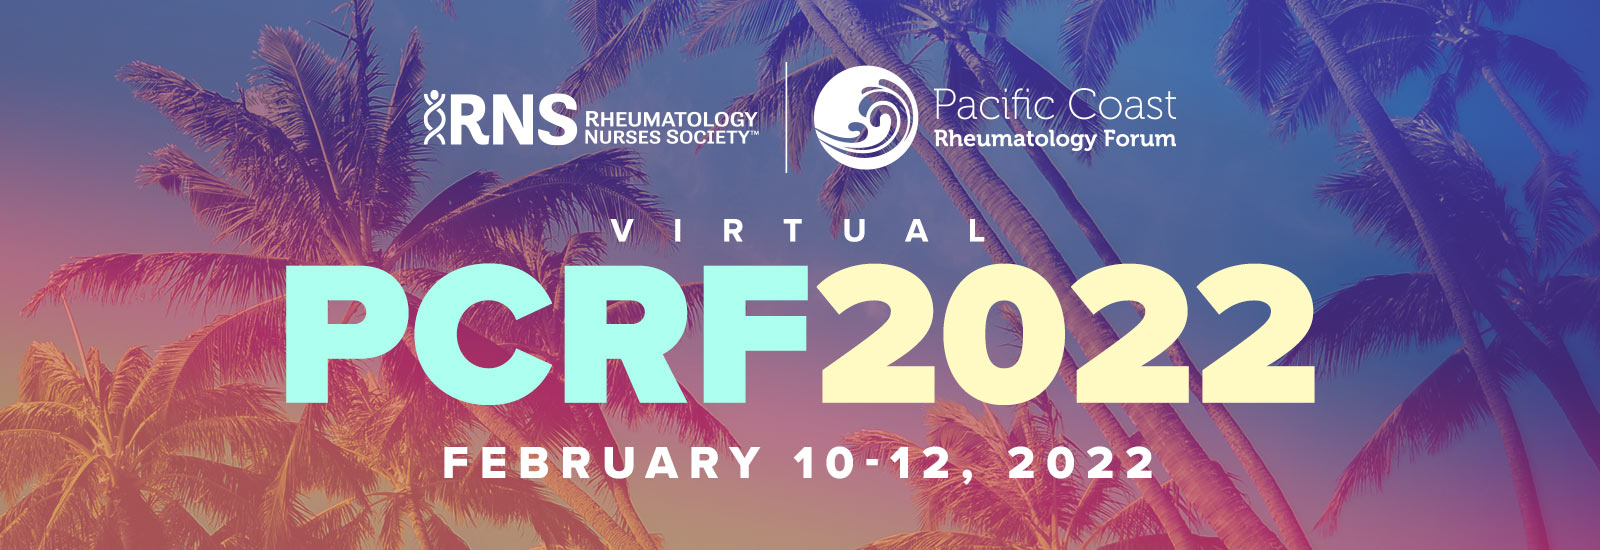 2022 Pacific Coast Rheumatology Forum - February 10-12, 2022